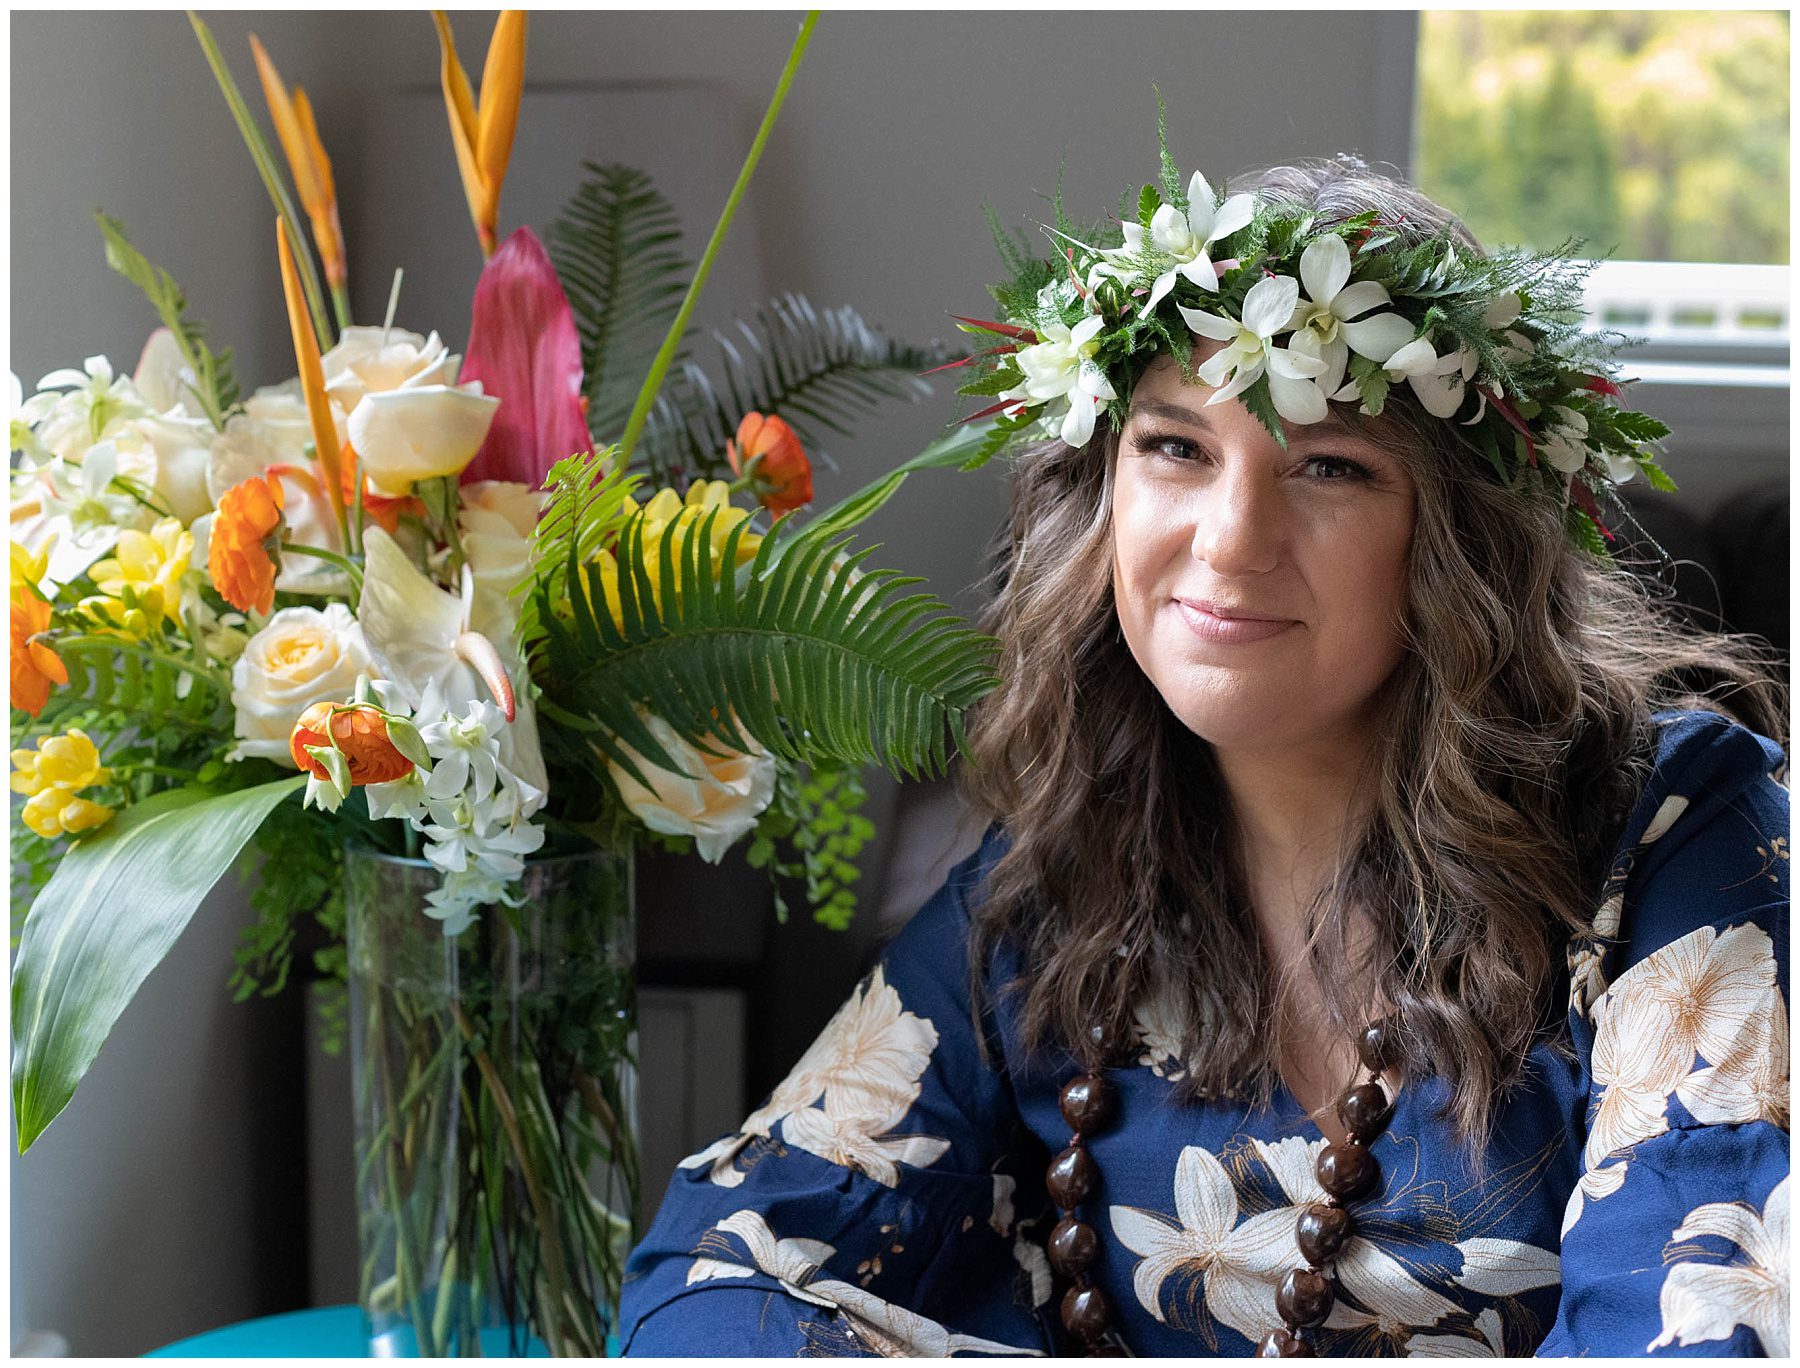 Rebecca Grant sitting next to a tropical floral arrangement